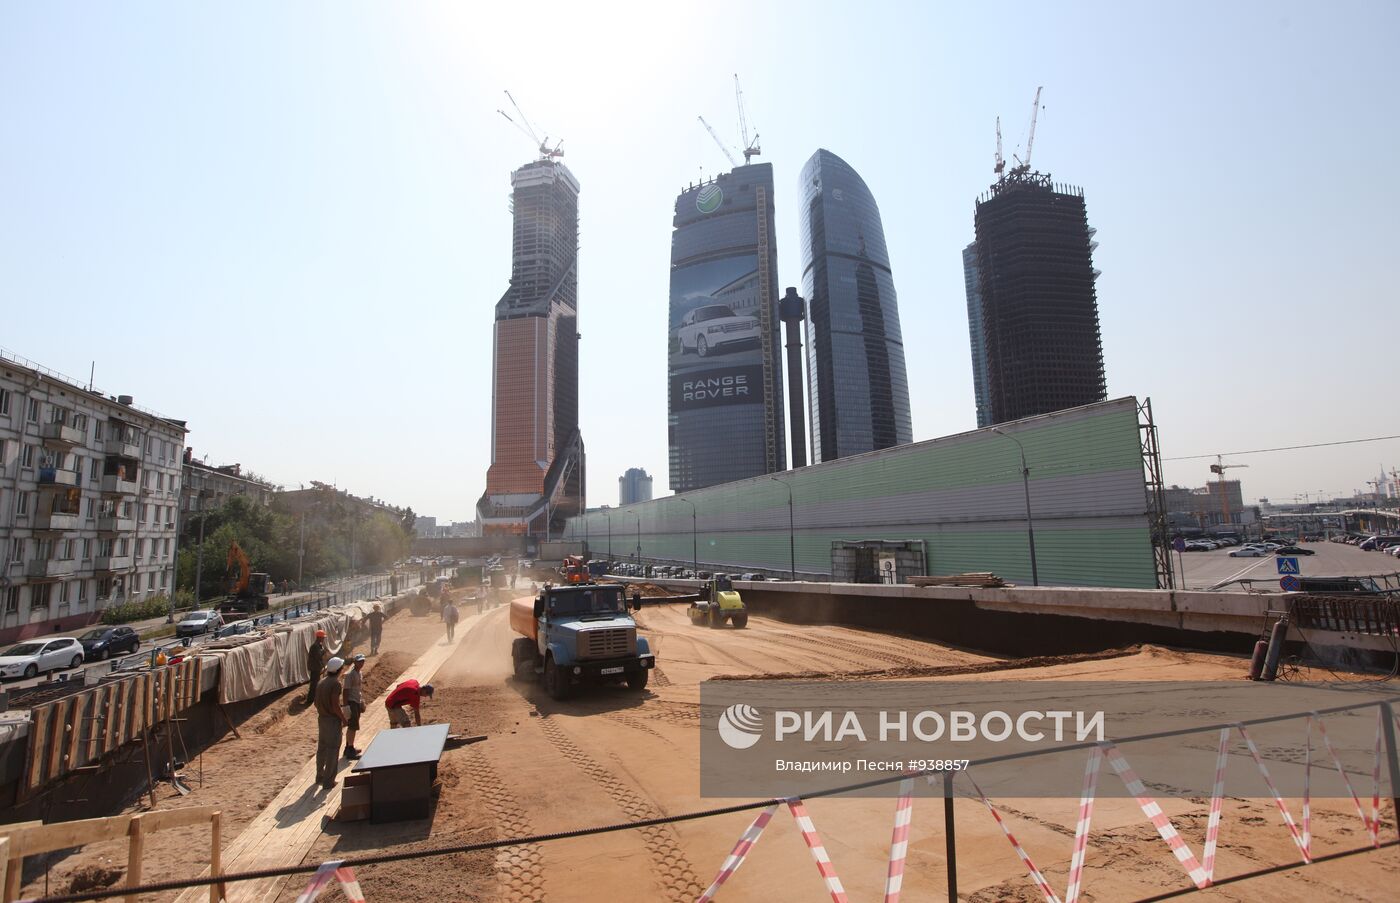 Строительство автомагистрали рядом с ММДЦ "Москва-СИТИ"